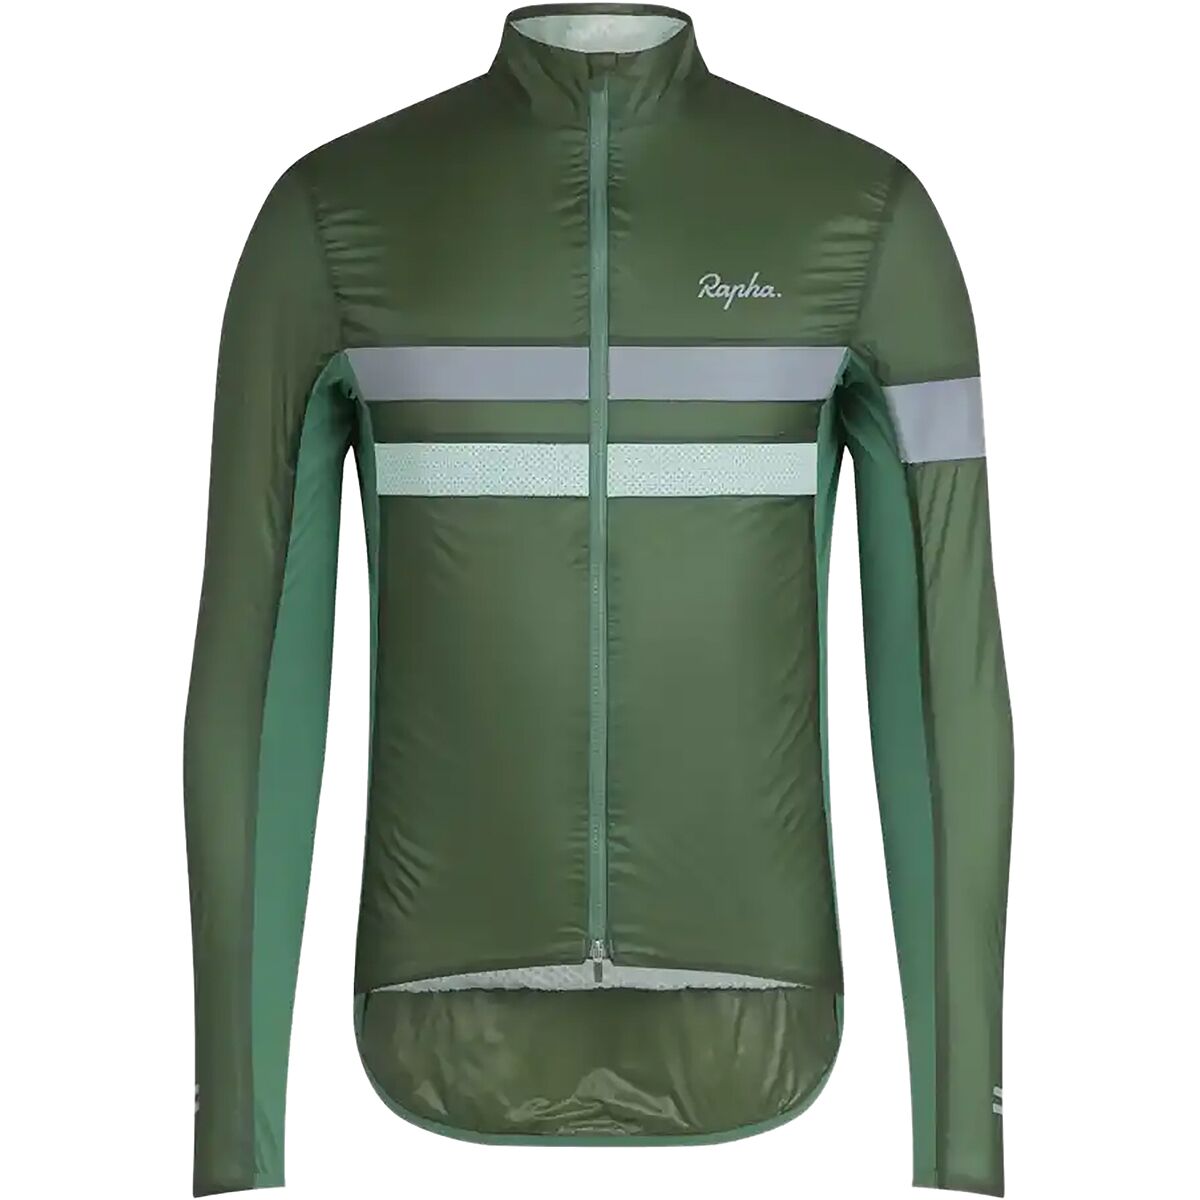 Rapha Brevet Insulated Jacket - Men's Dark Green/Pale Green, XL